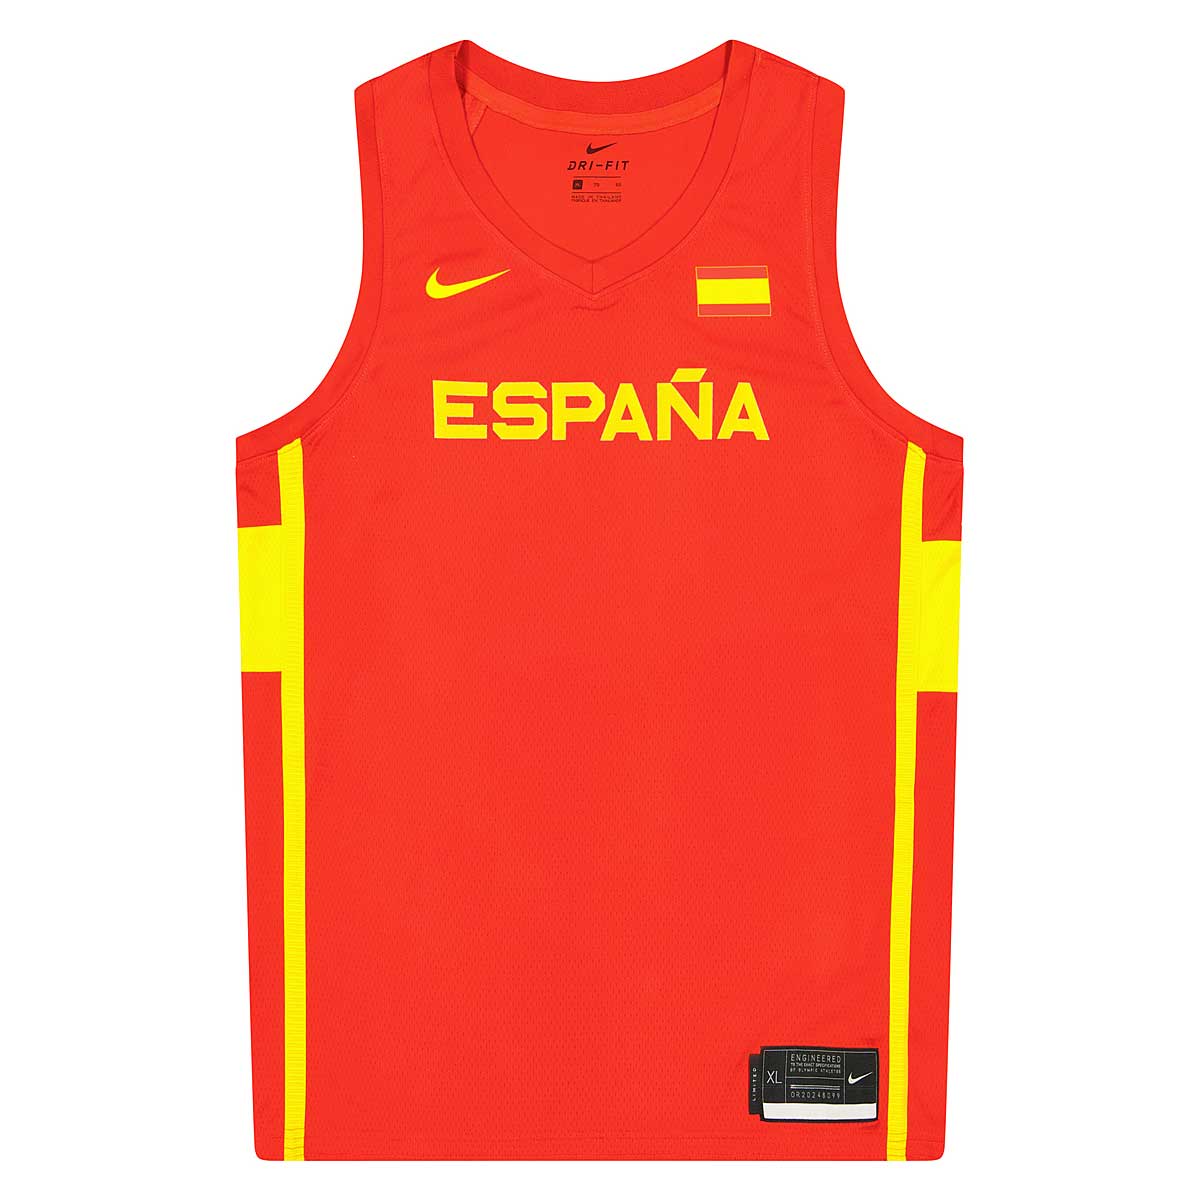 Desgracia Nacional caja Buy FIBA WORLD CUP SPAIN BASKETBALL ROAD JERSEY for EUR 99.95 on KICKZ.com!